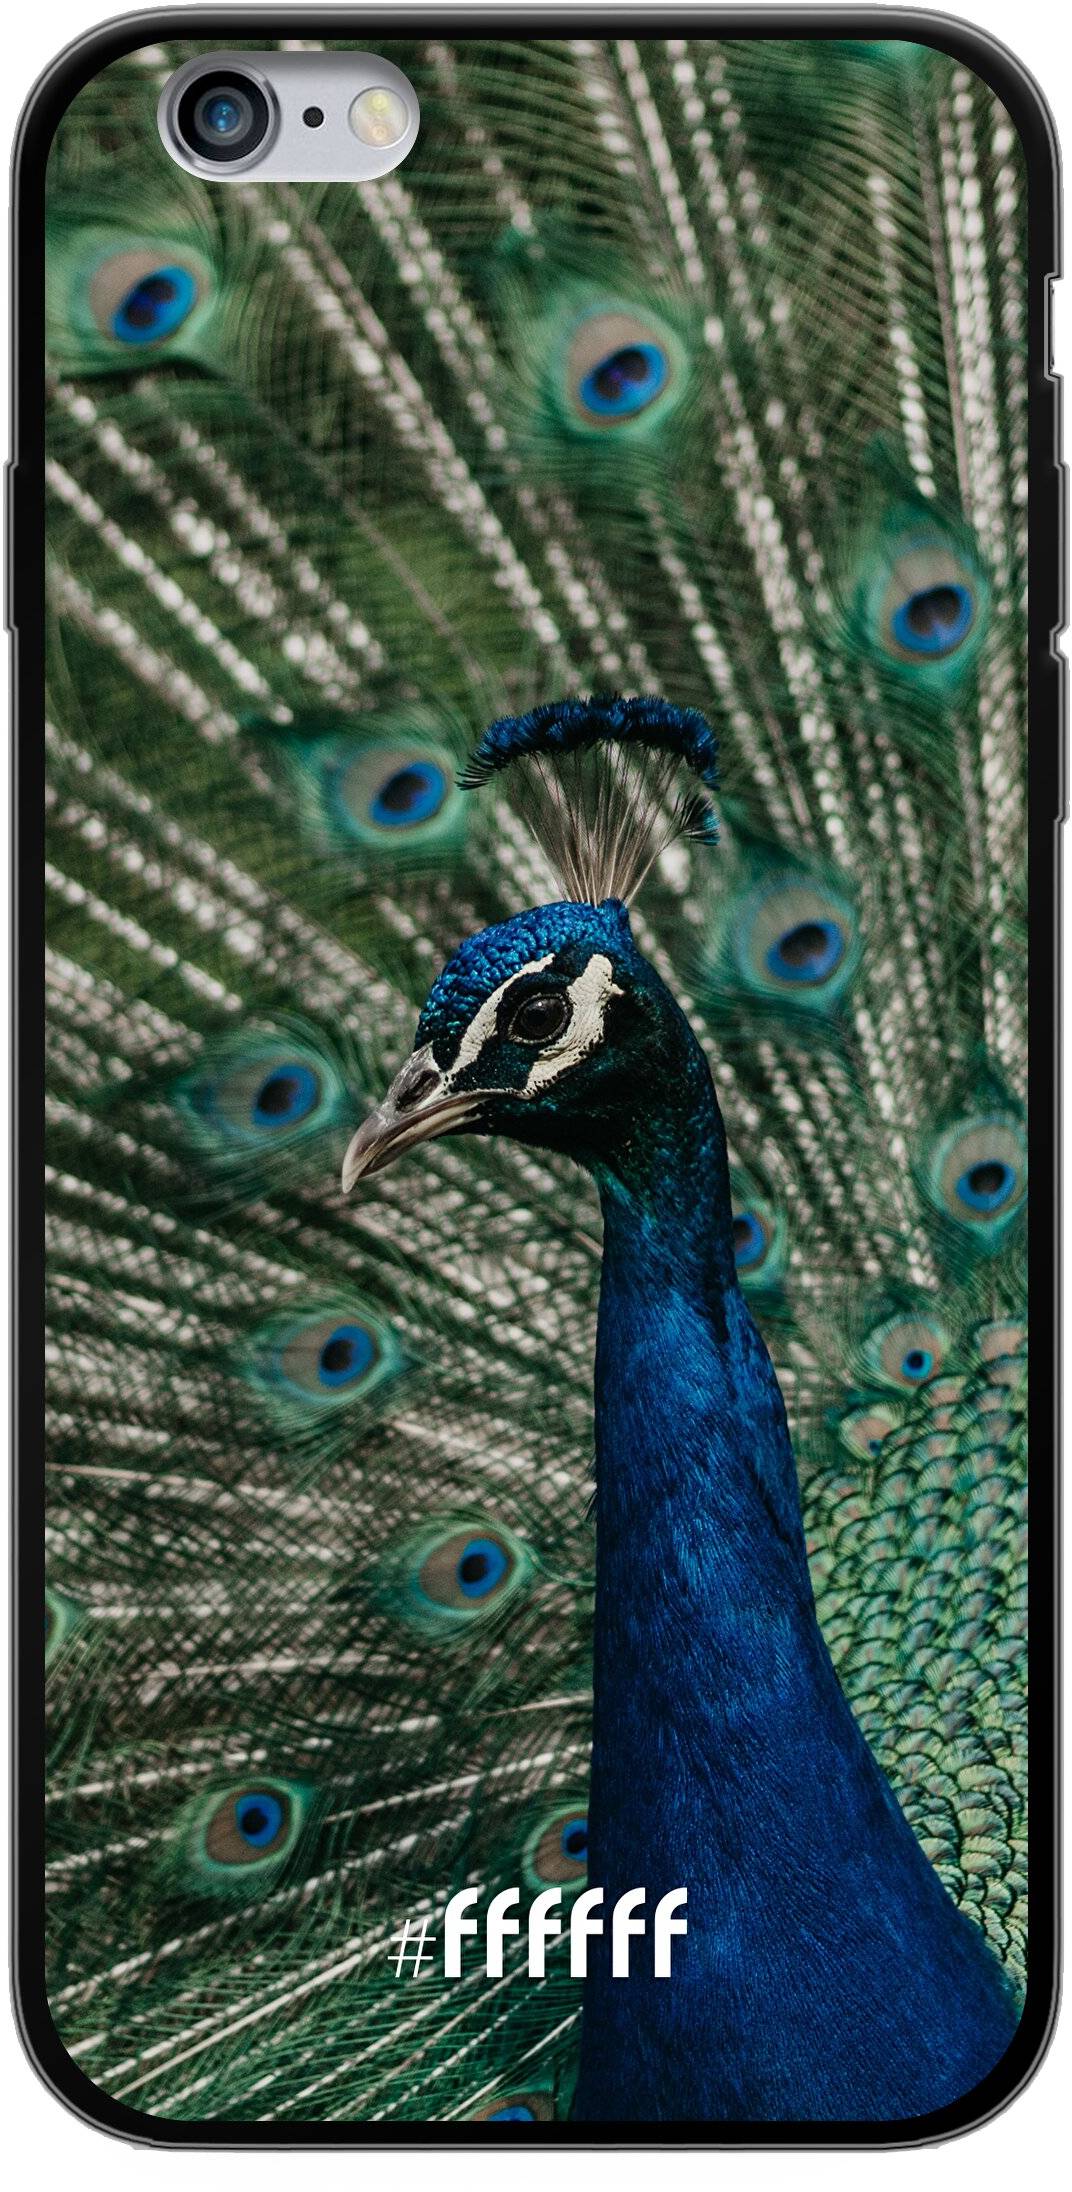 Peacock iPhone 6s